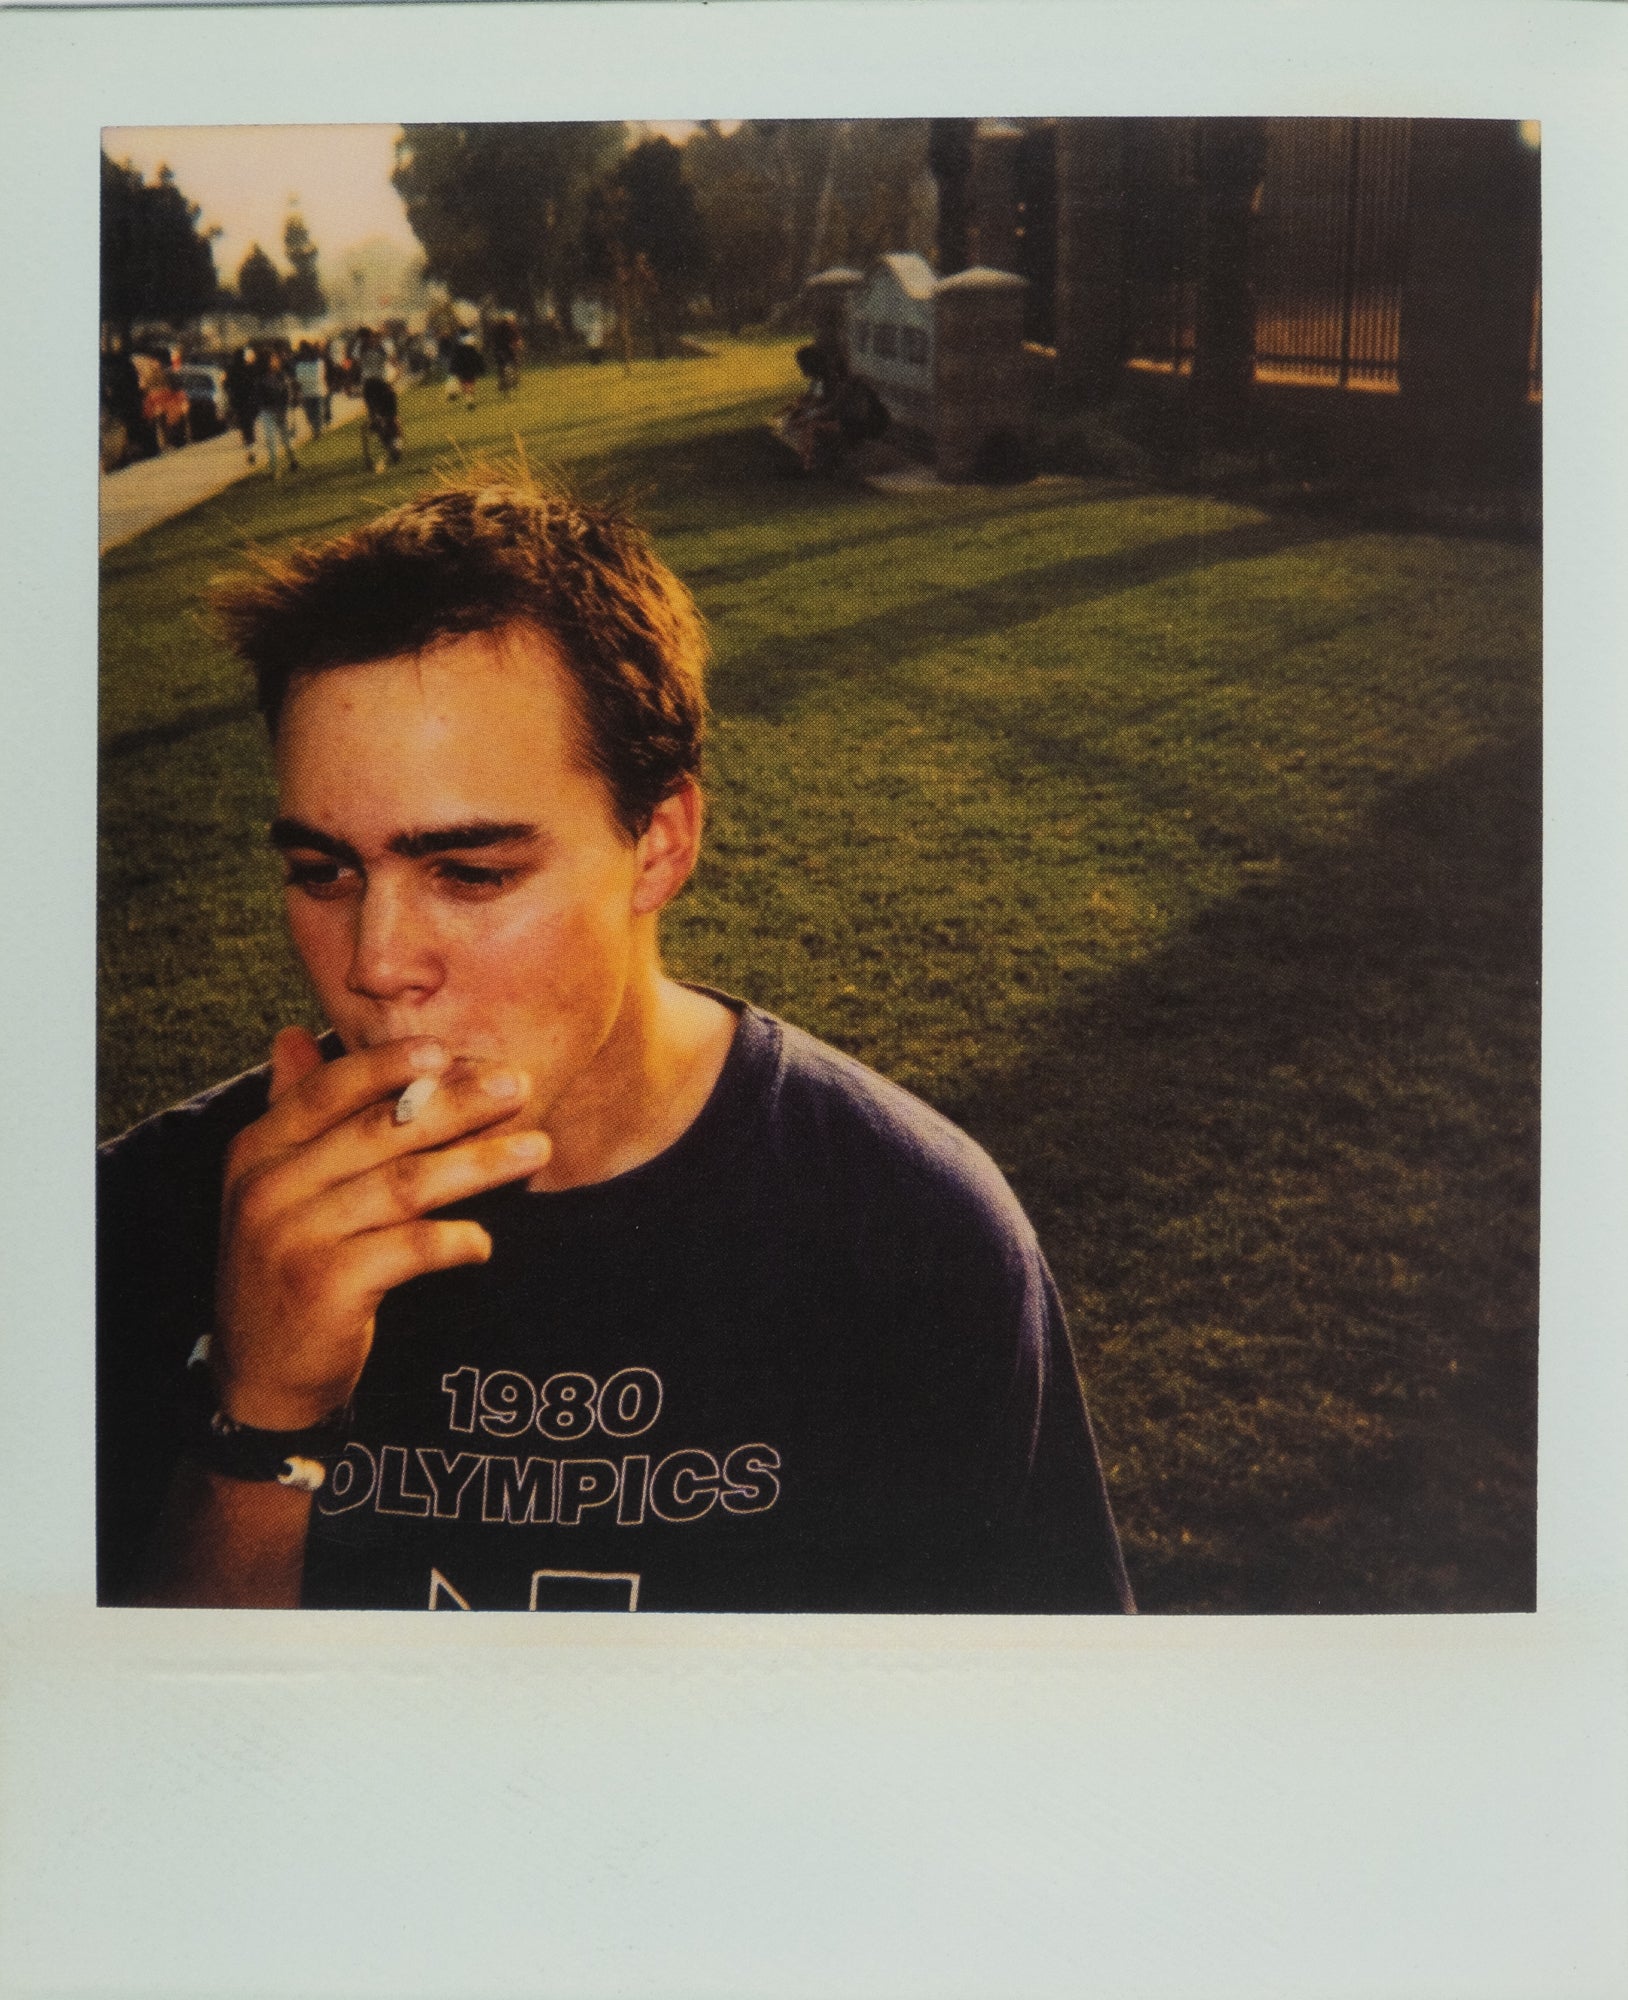 Ed Templeton — Teenage Smokers